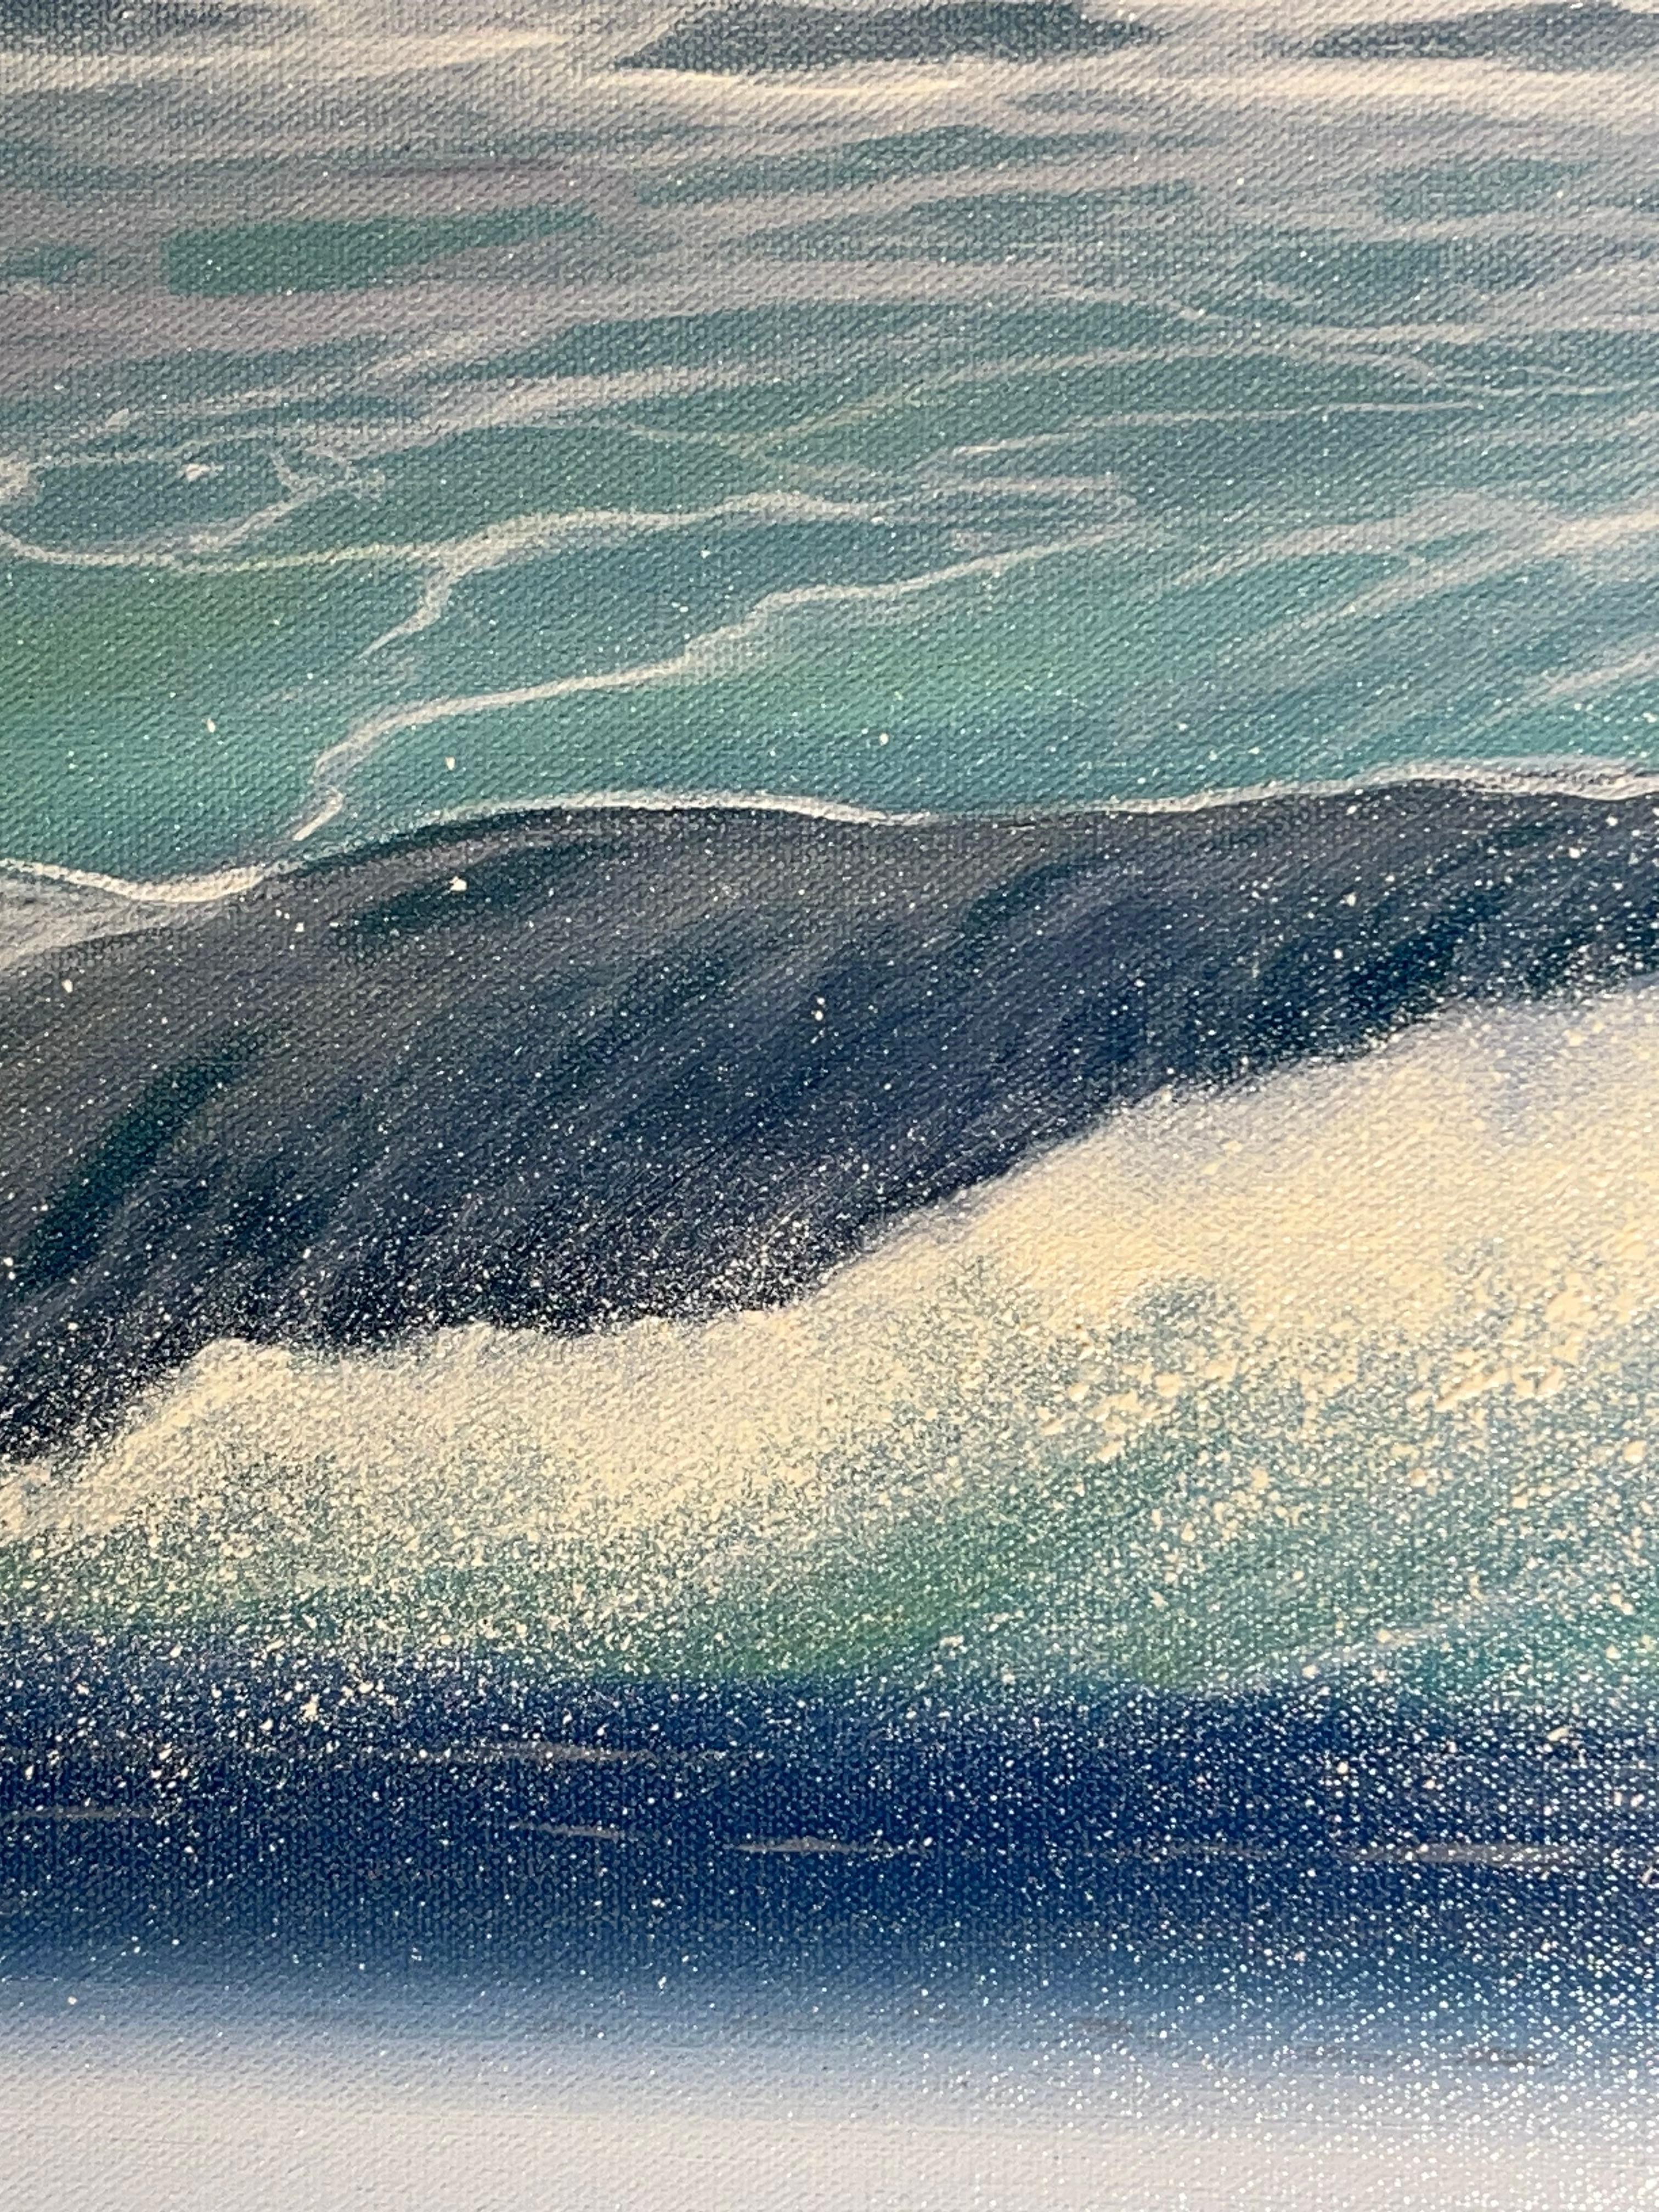 Exhale-ORIGINAL REALISM SEASCAPE Ocean oil painting-contemporary artwork For Sale 2